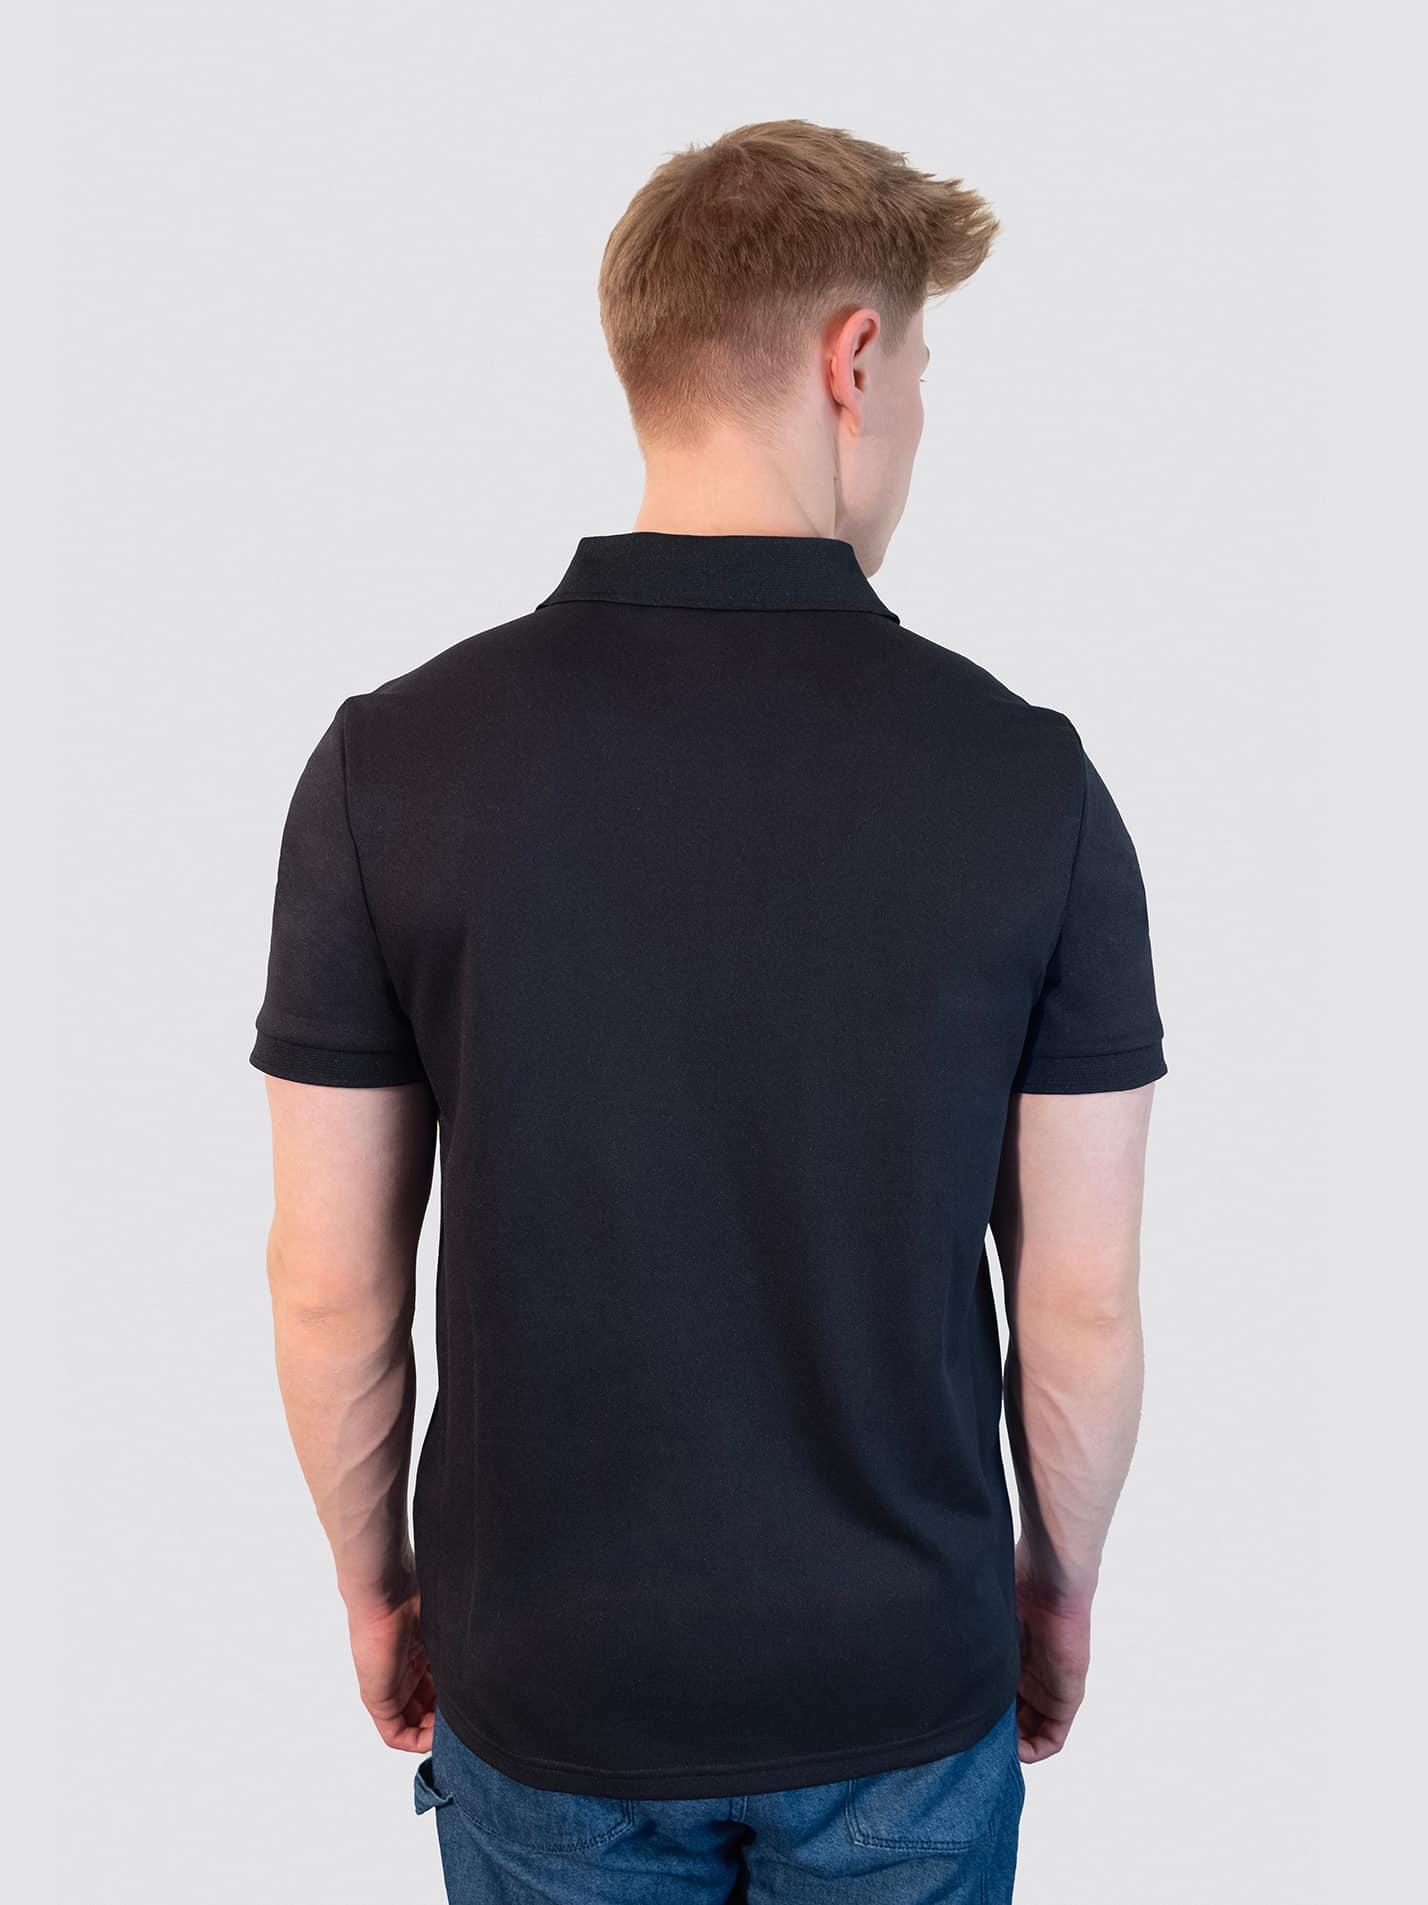 Girton College Cambridge Sustainable Men's Polo Shirt